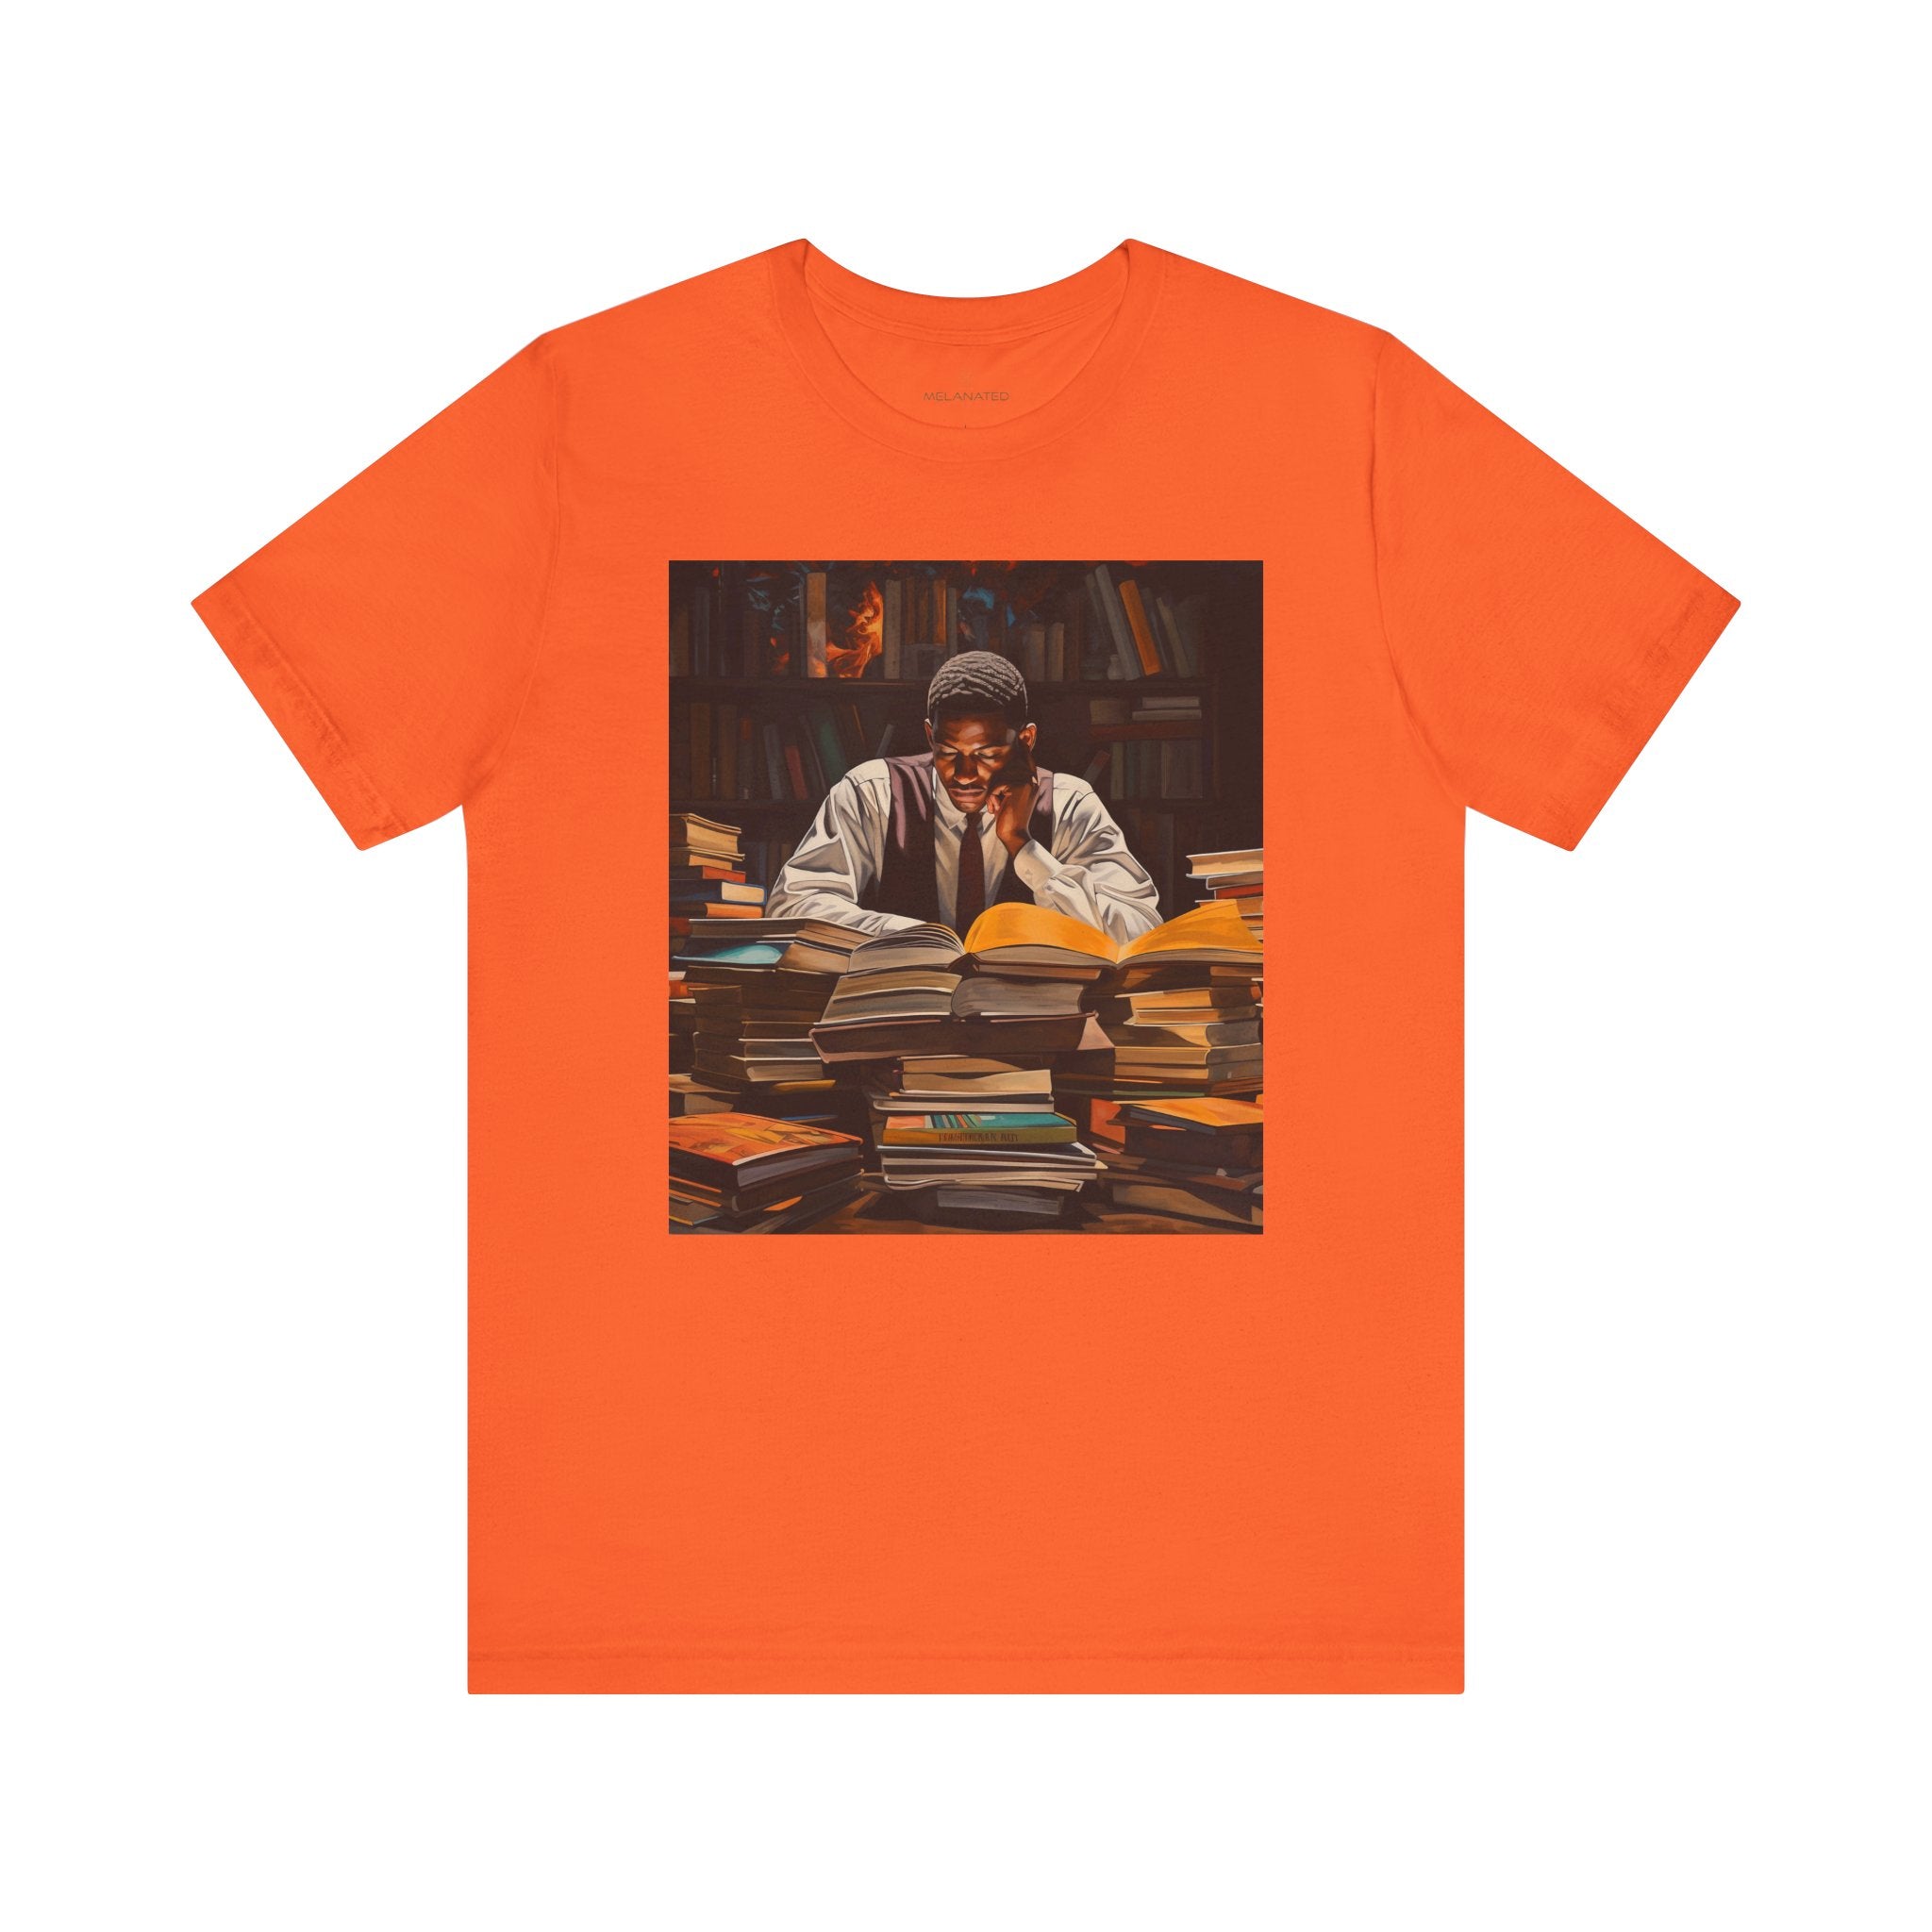 Black Male Student Tee Shirt in orange.